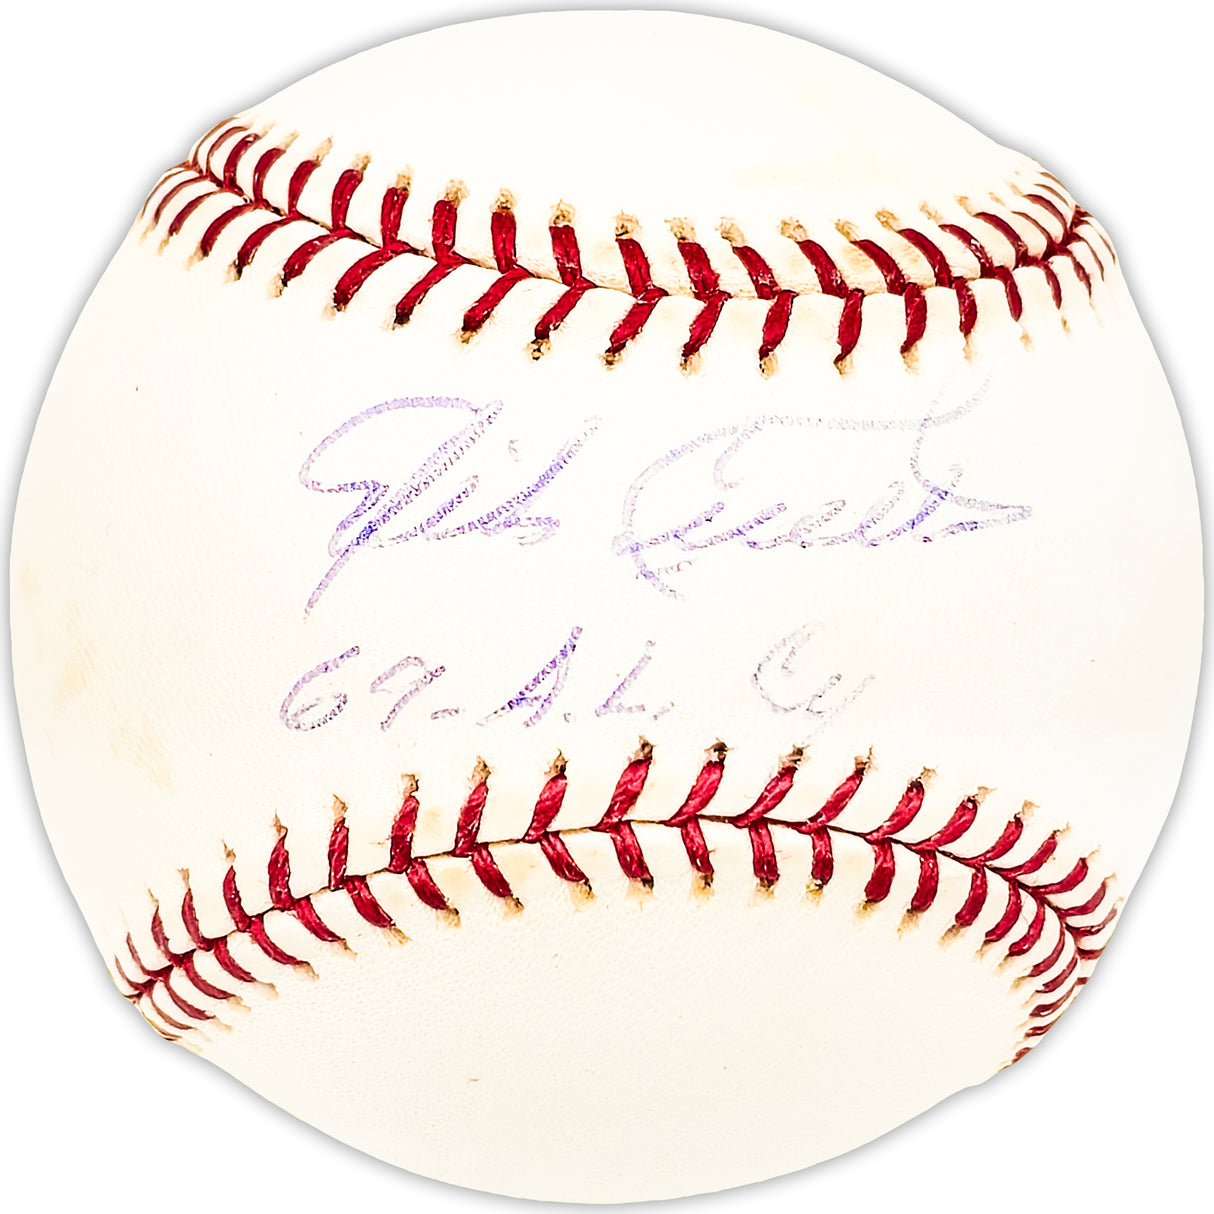 Mike Cuellar Autographed Official AL Baseball Baltimore Orioles "67 AL CY" Beckett BAS QR #BM25010